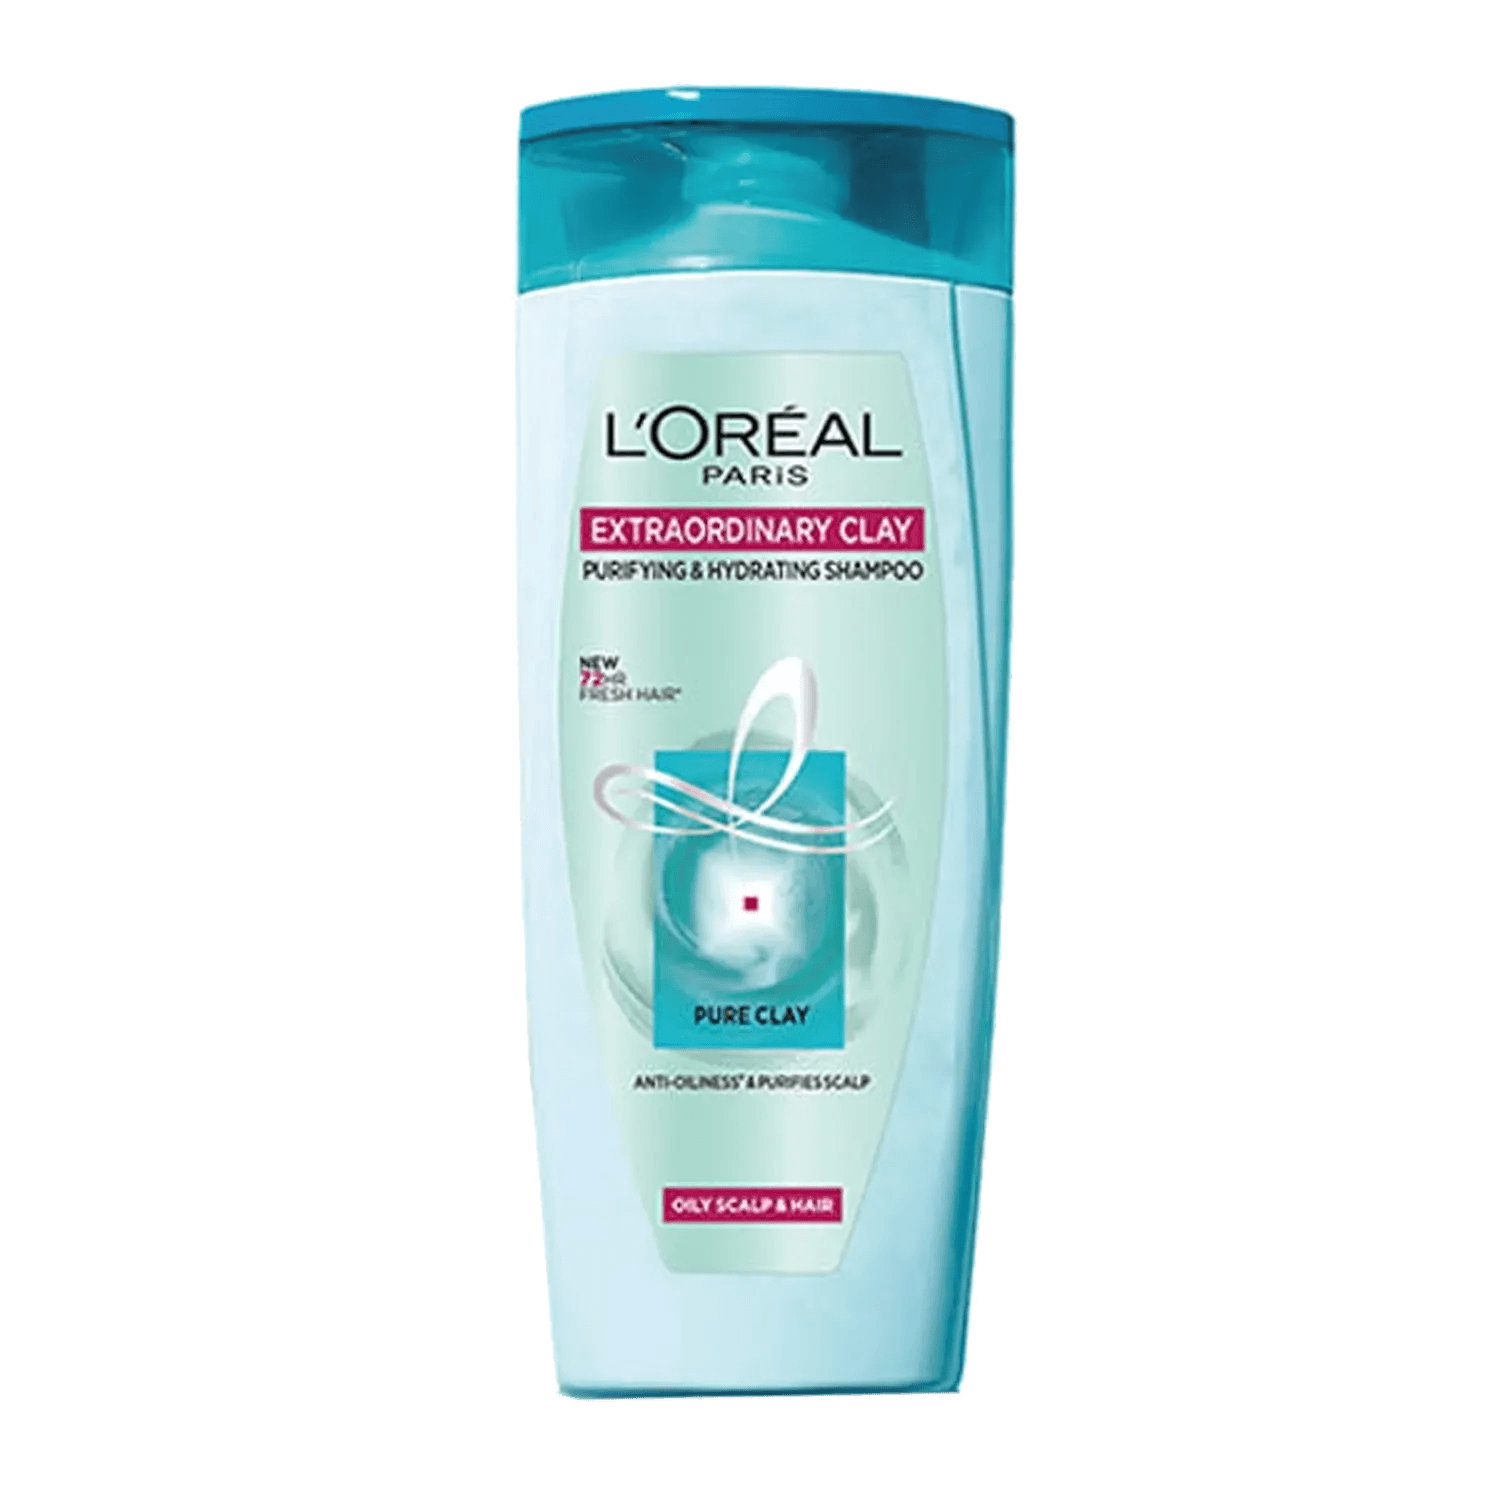 L'Oreal Paris | L'Oreal Paris Extraordinary Clay  Shampoo,  82.5ml